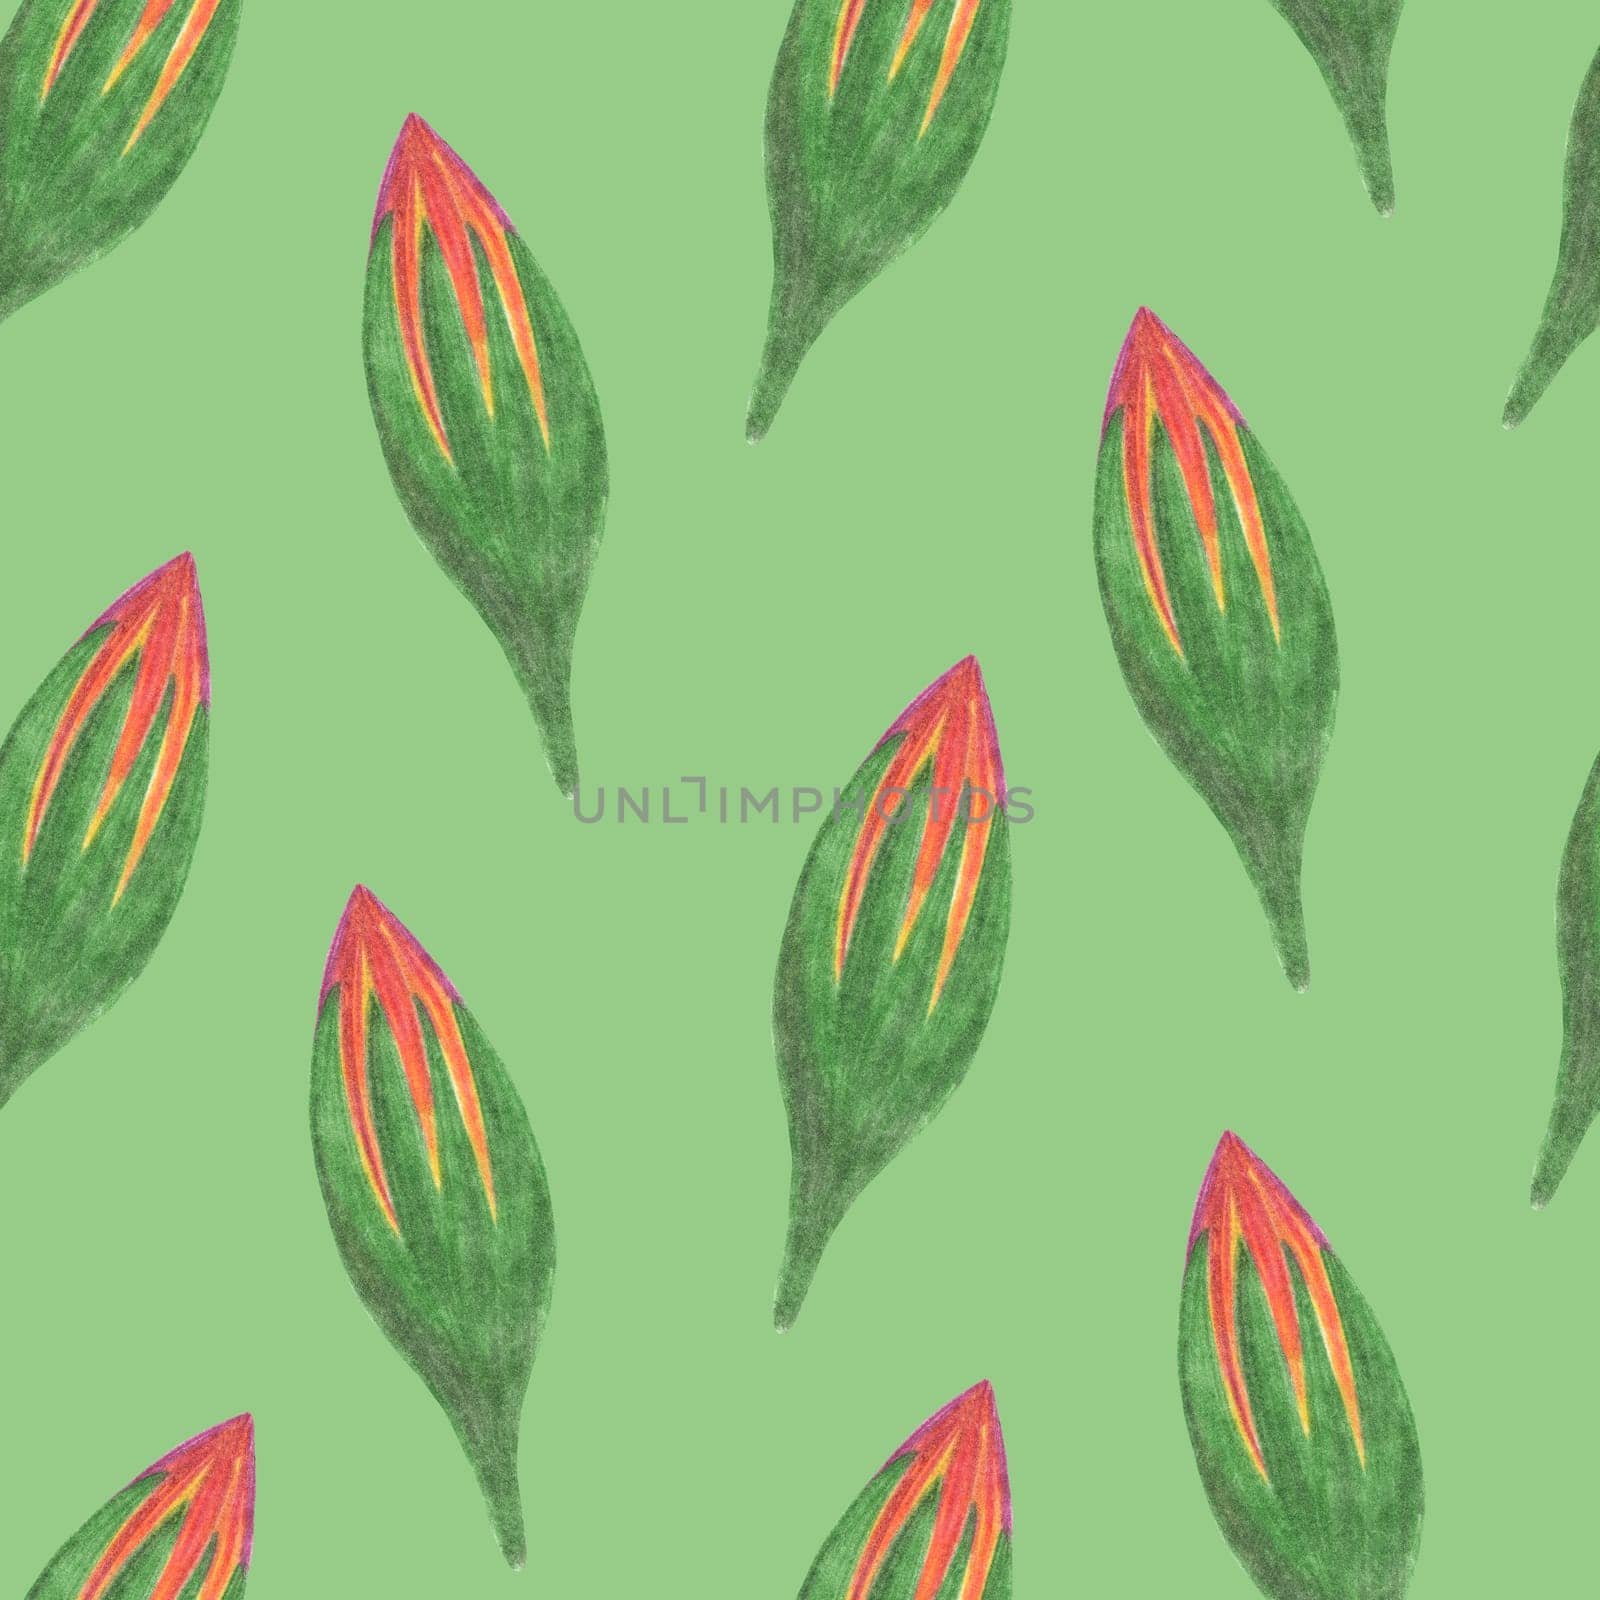 Marigold Flower Bud Seamless Pattern. Floral Bud Digital Paper on Green Background.